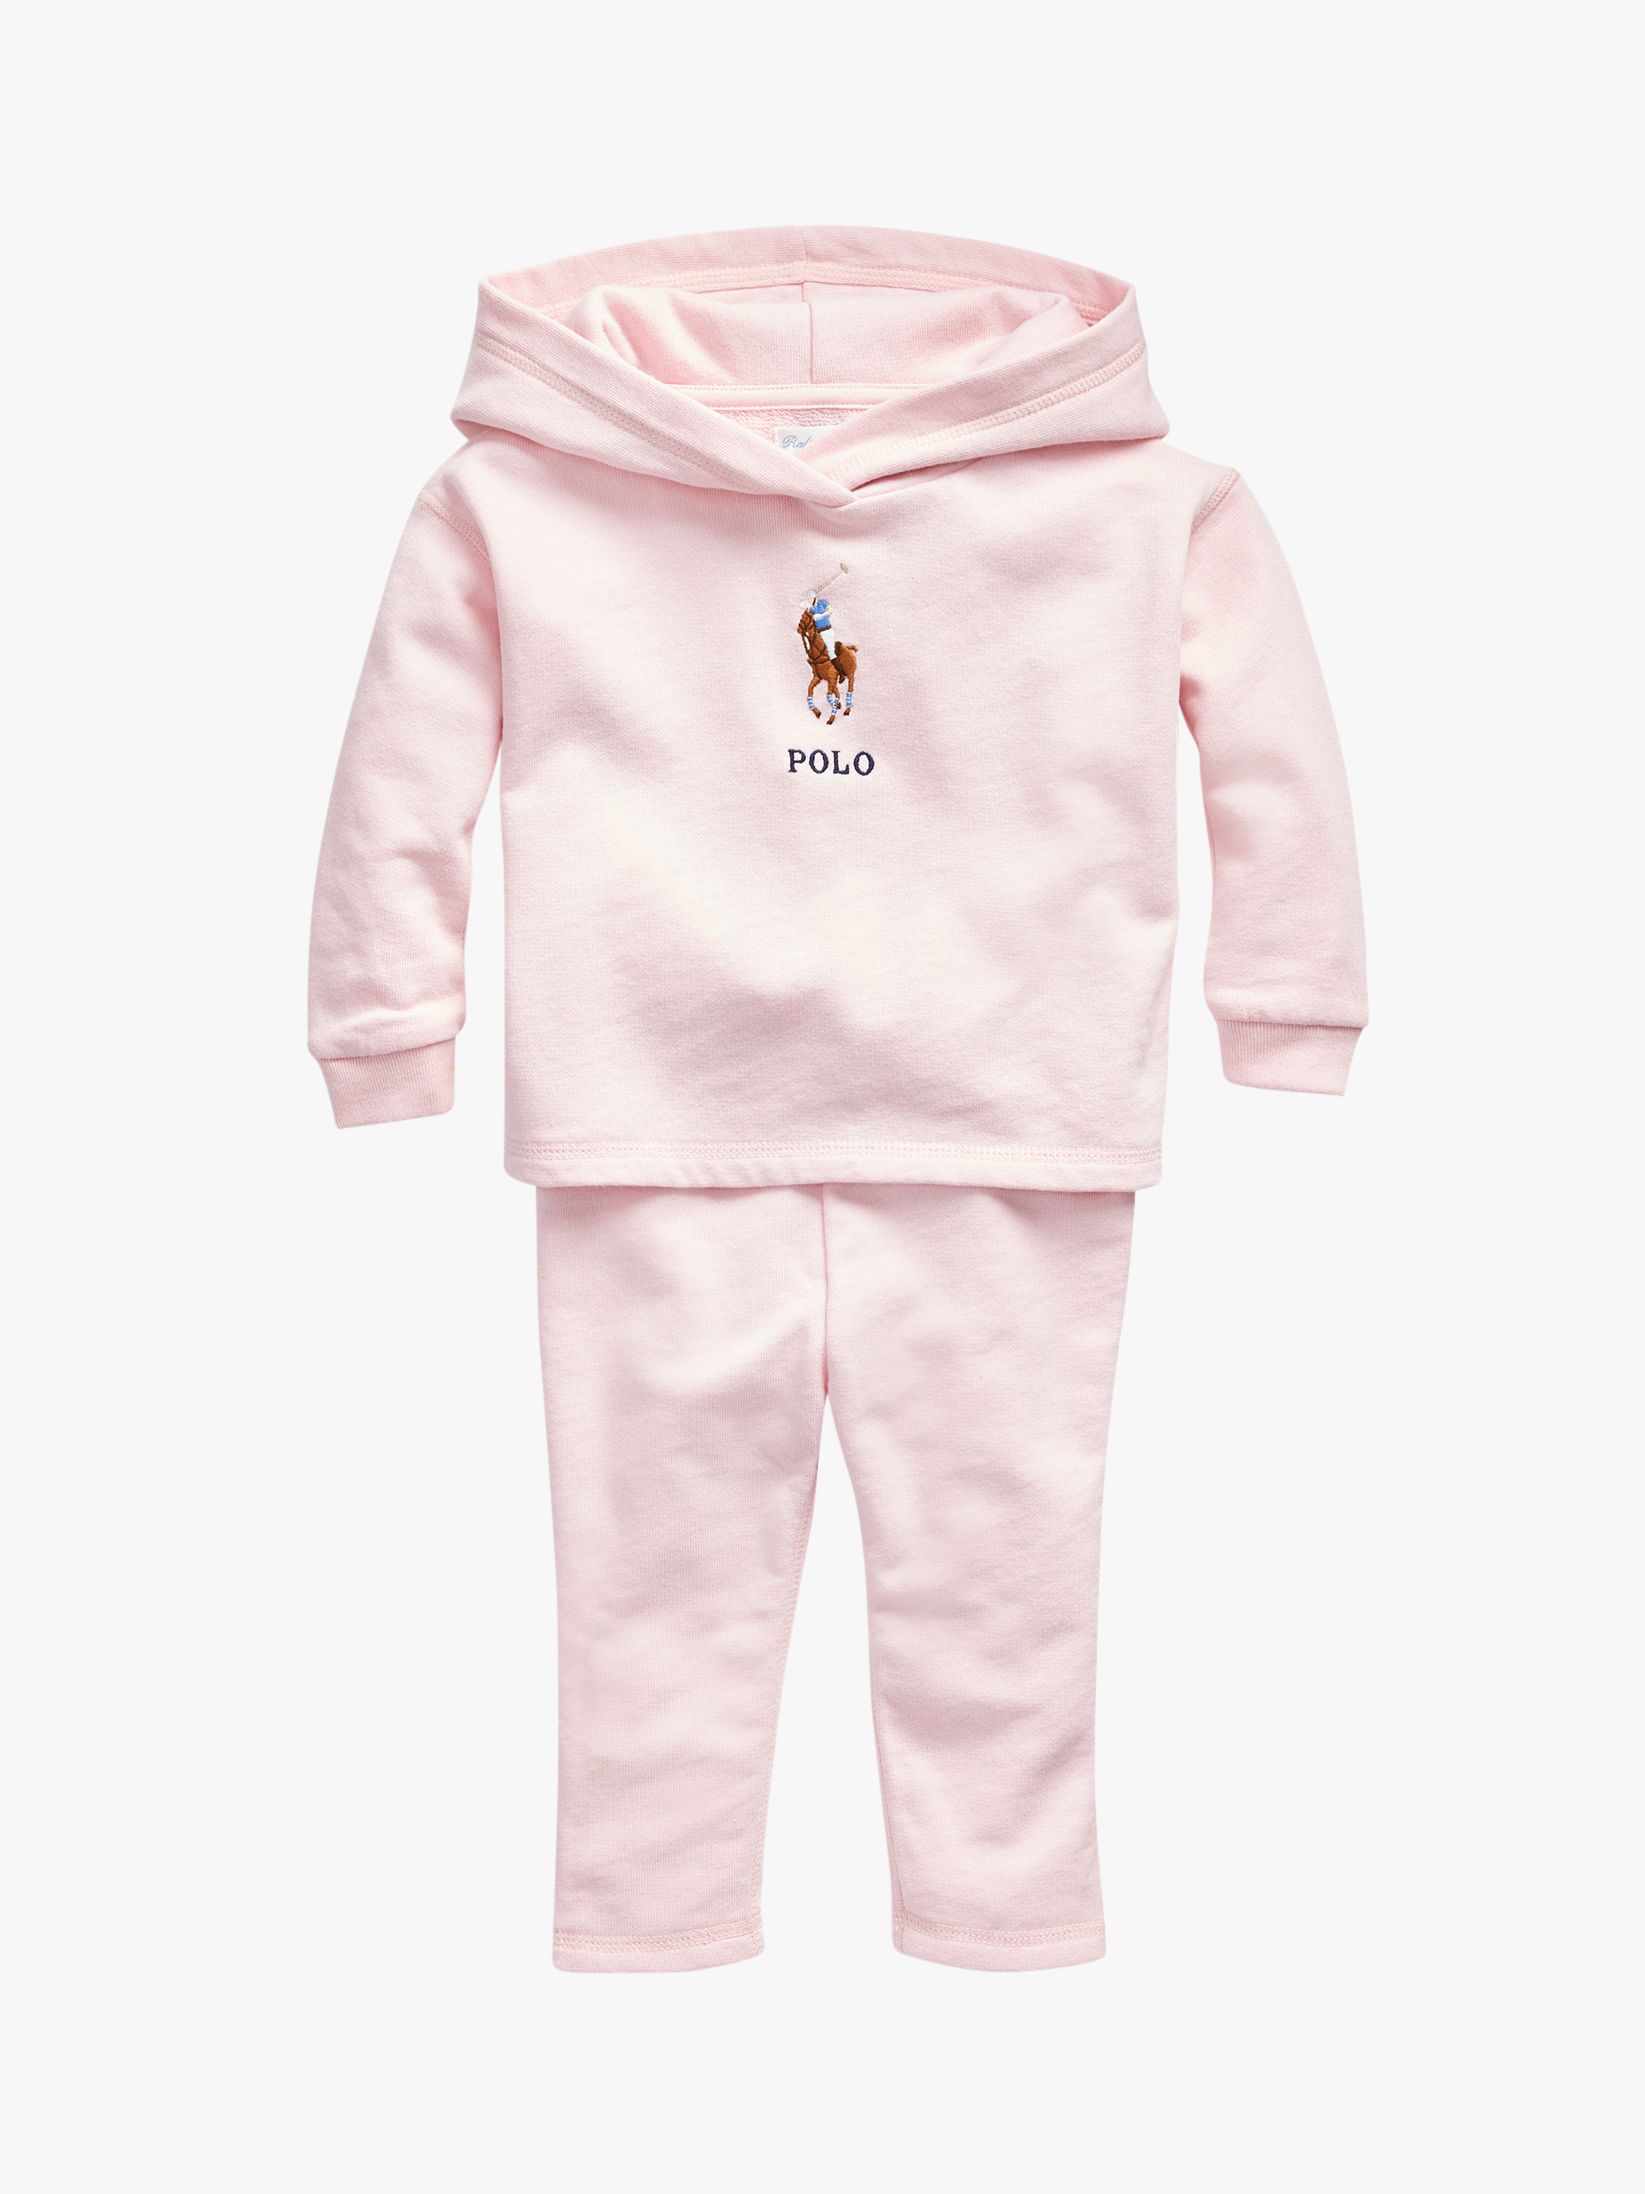 Polo Ralph Lauren Baby Fleece Outfit 